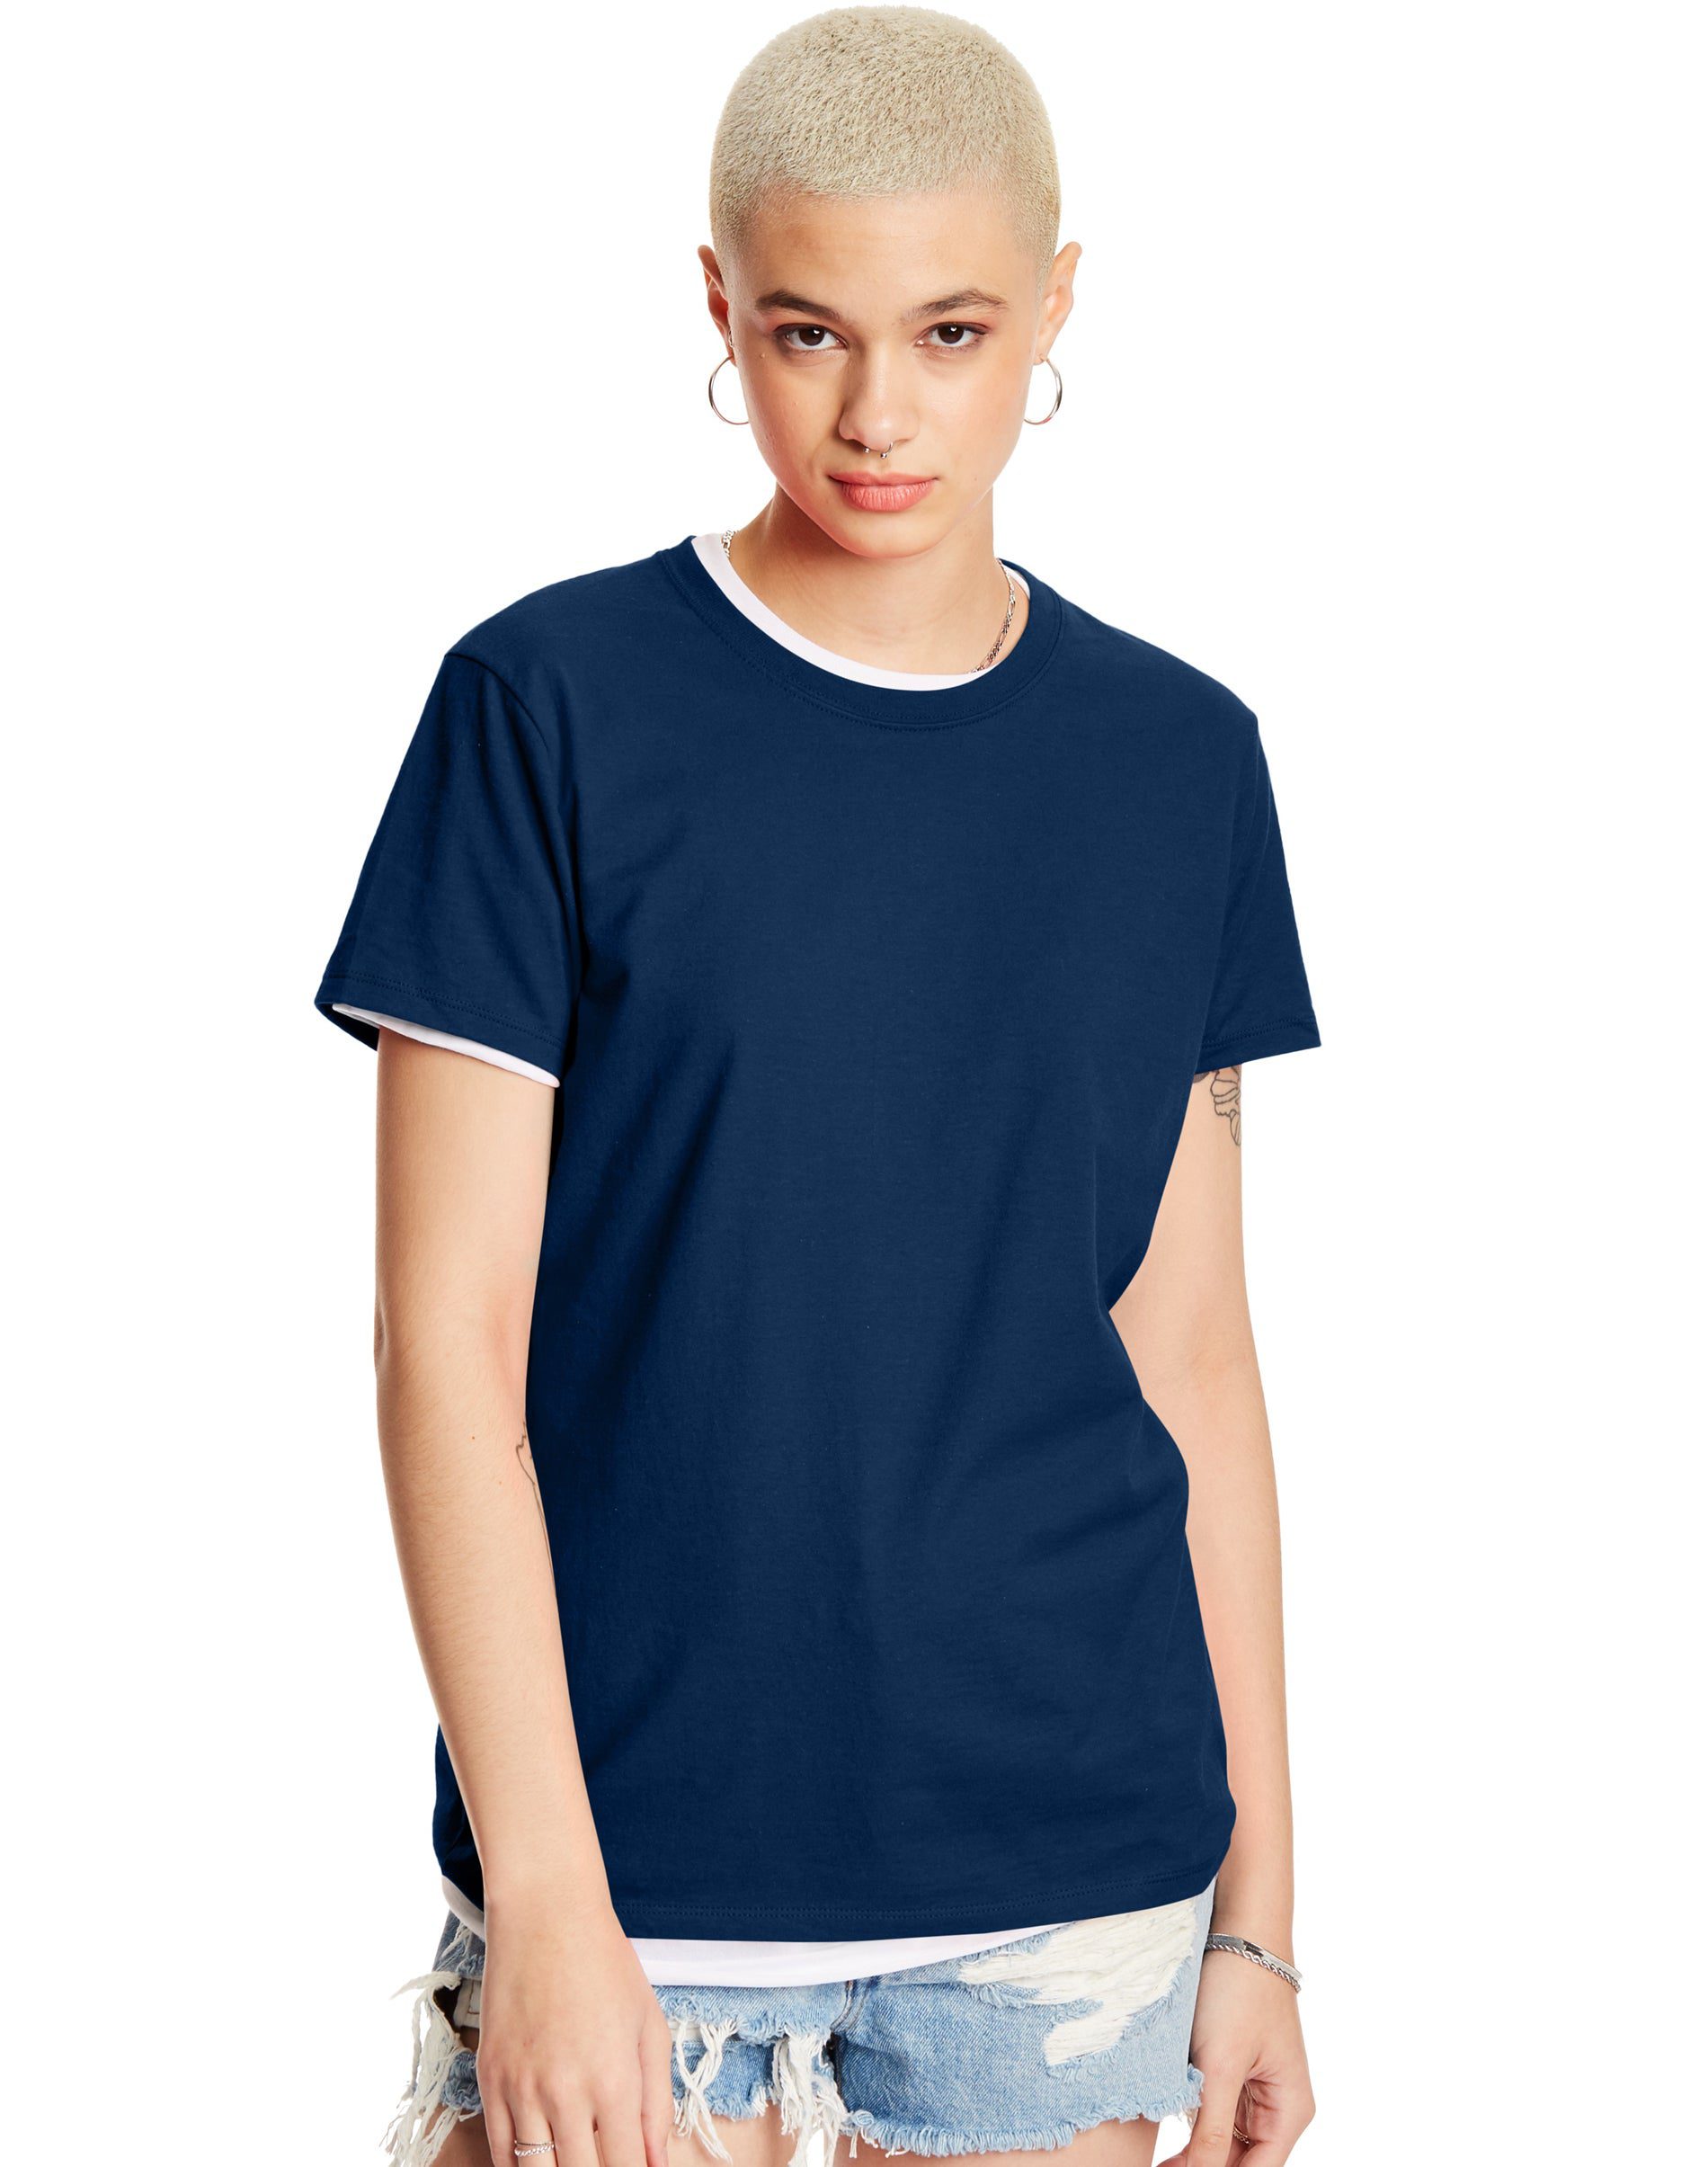 Hanes Womens Perfect-T Short Sleeve Cotton T-Shirt